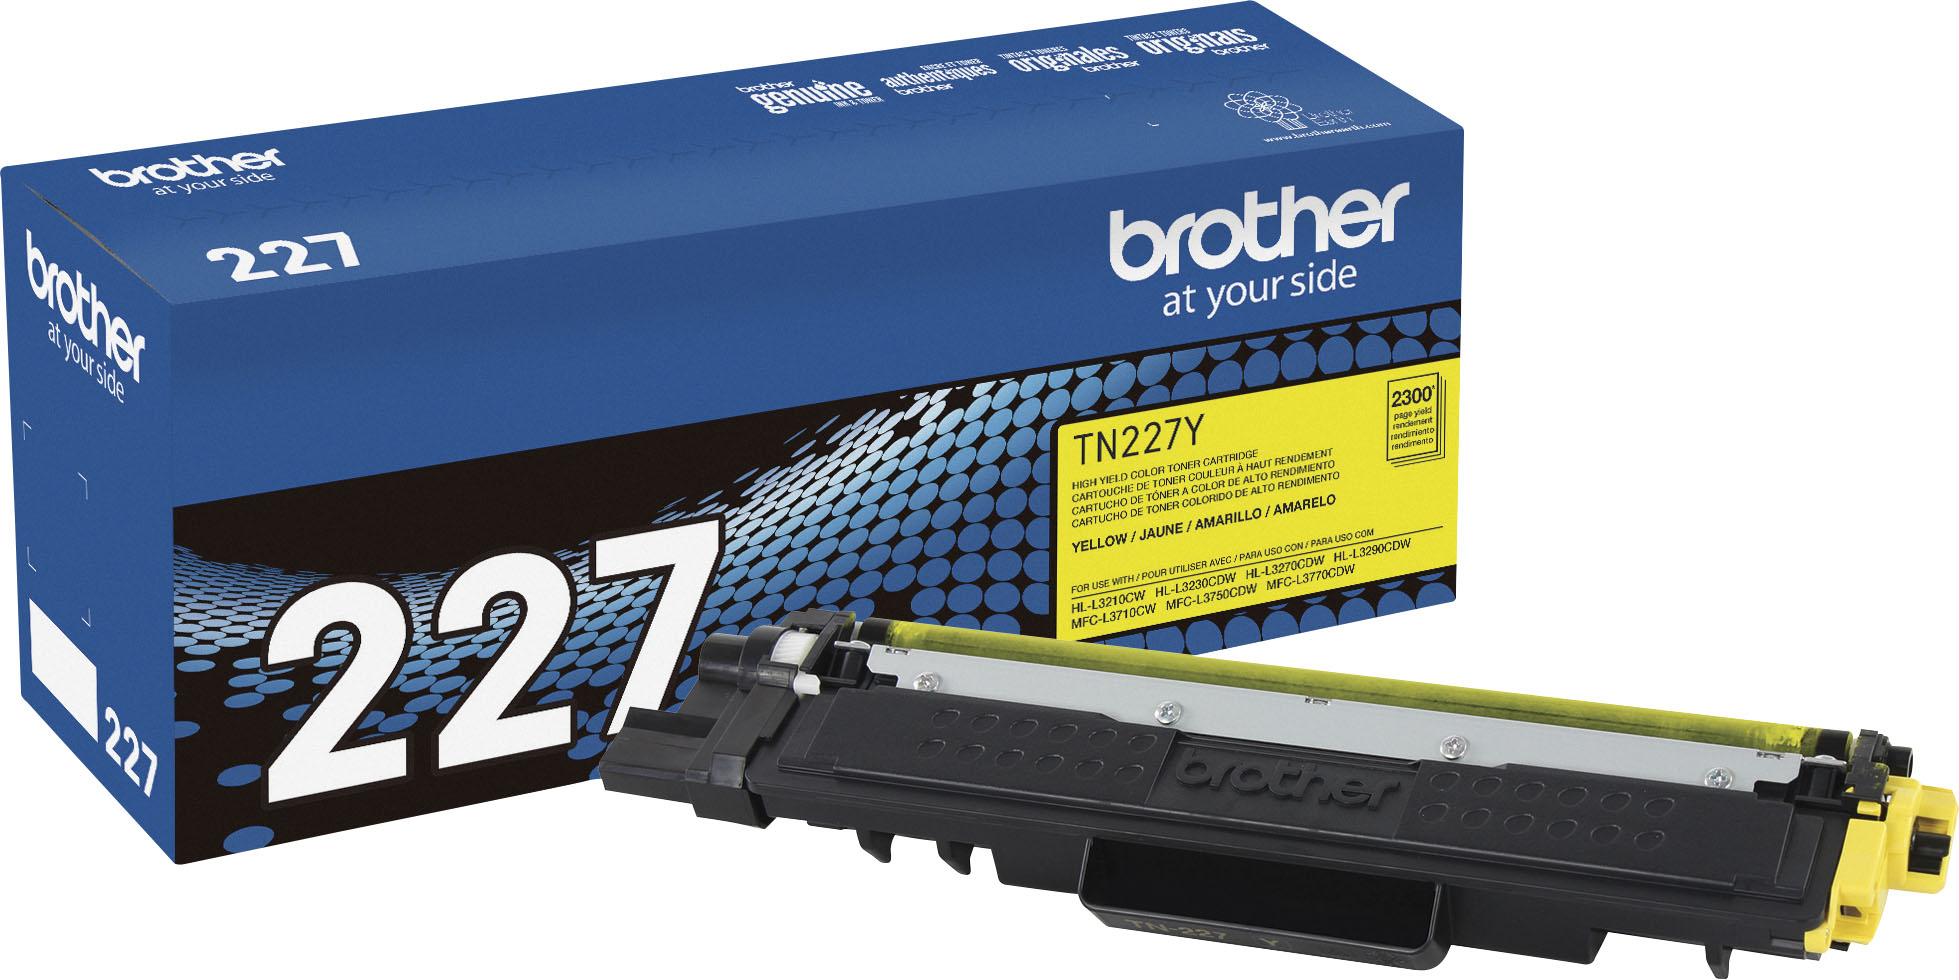 Compatible Brother TN2420 Toner Cartridges -  – Yellow Yeti